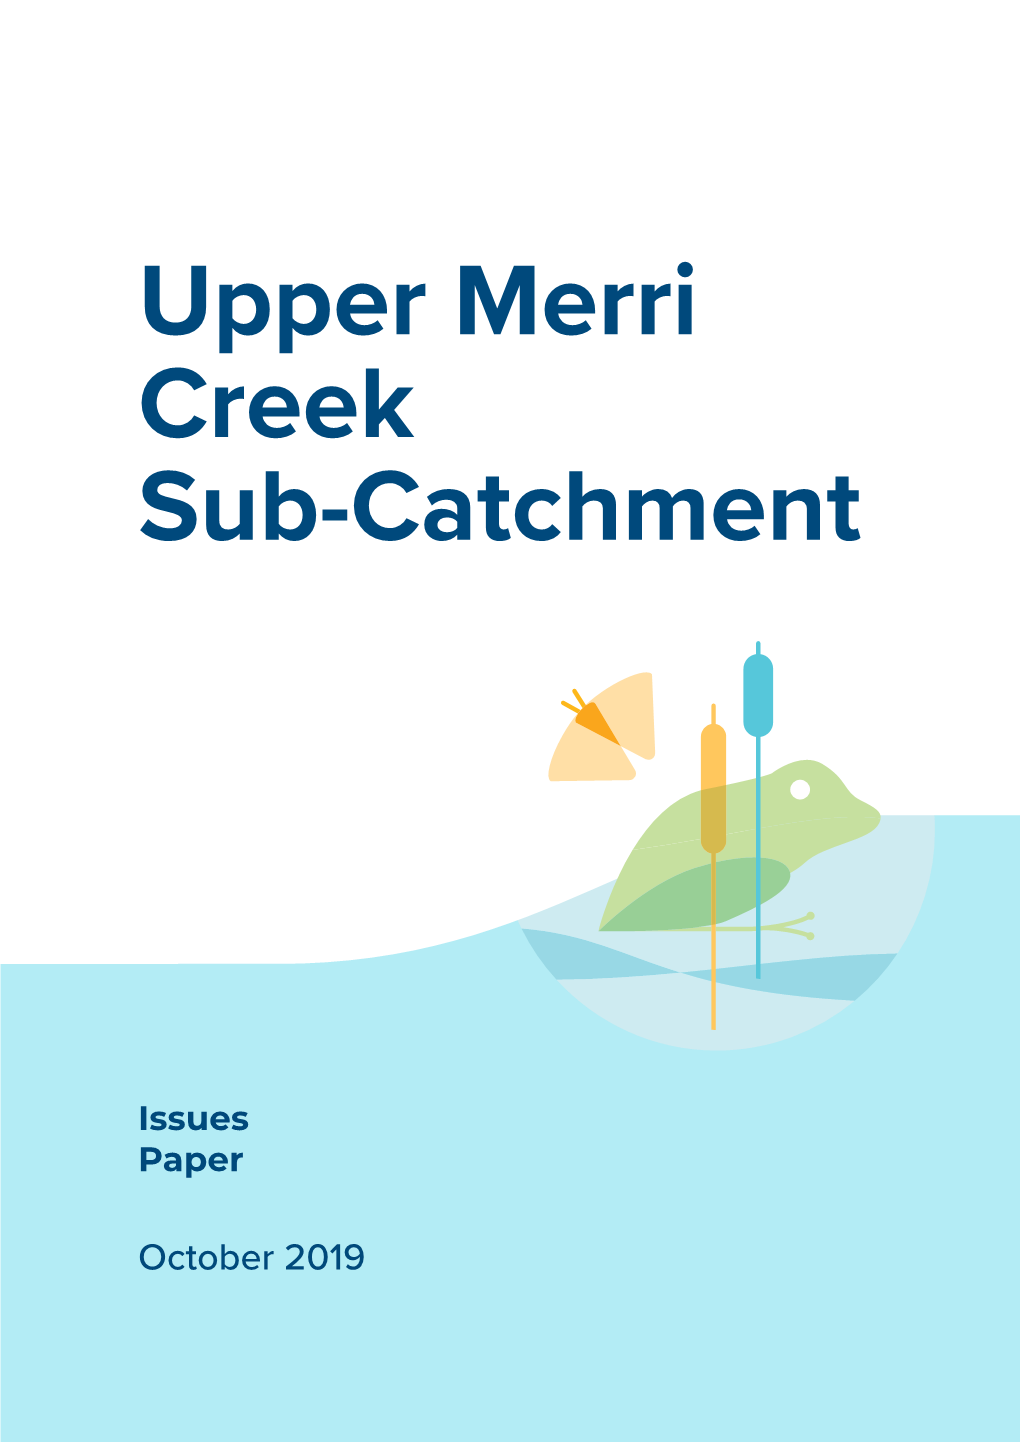 Upper Merri Creek Sub-Catchment